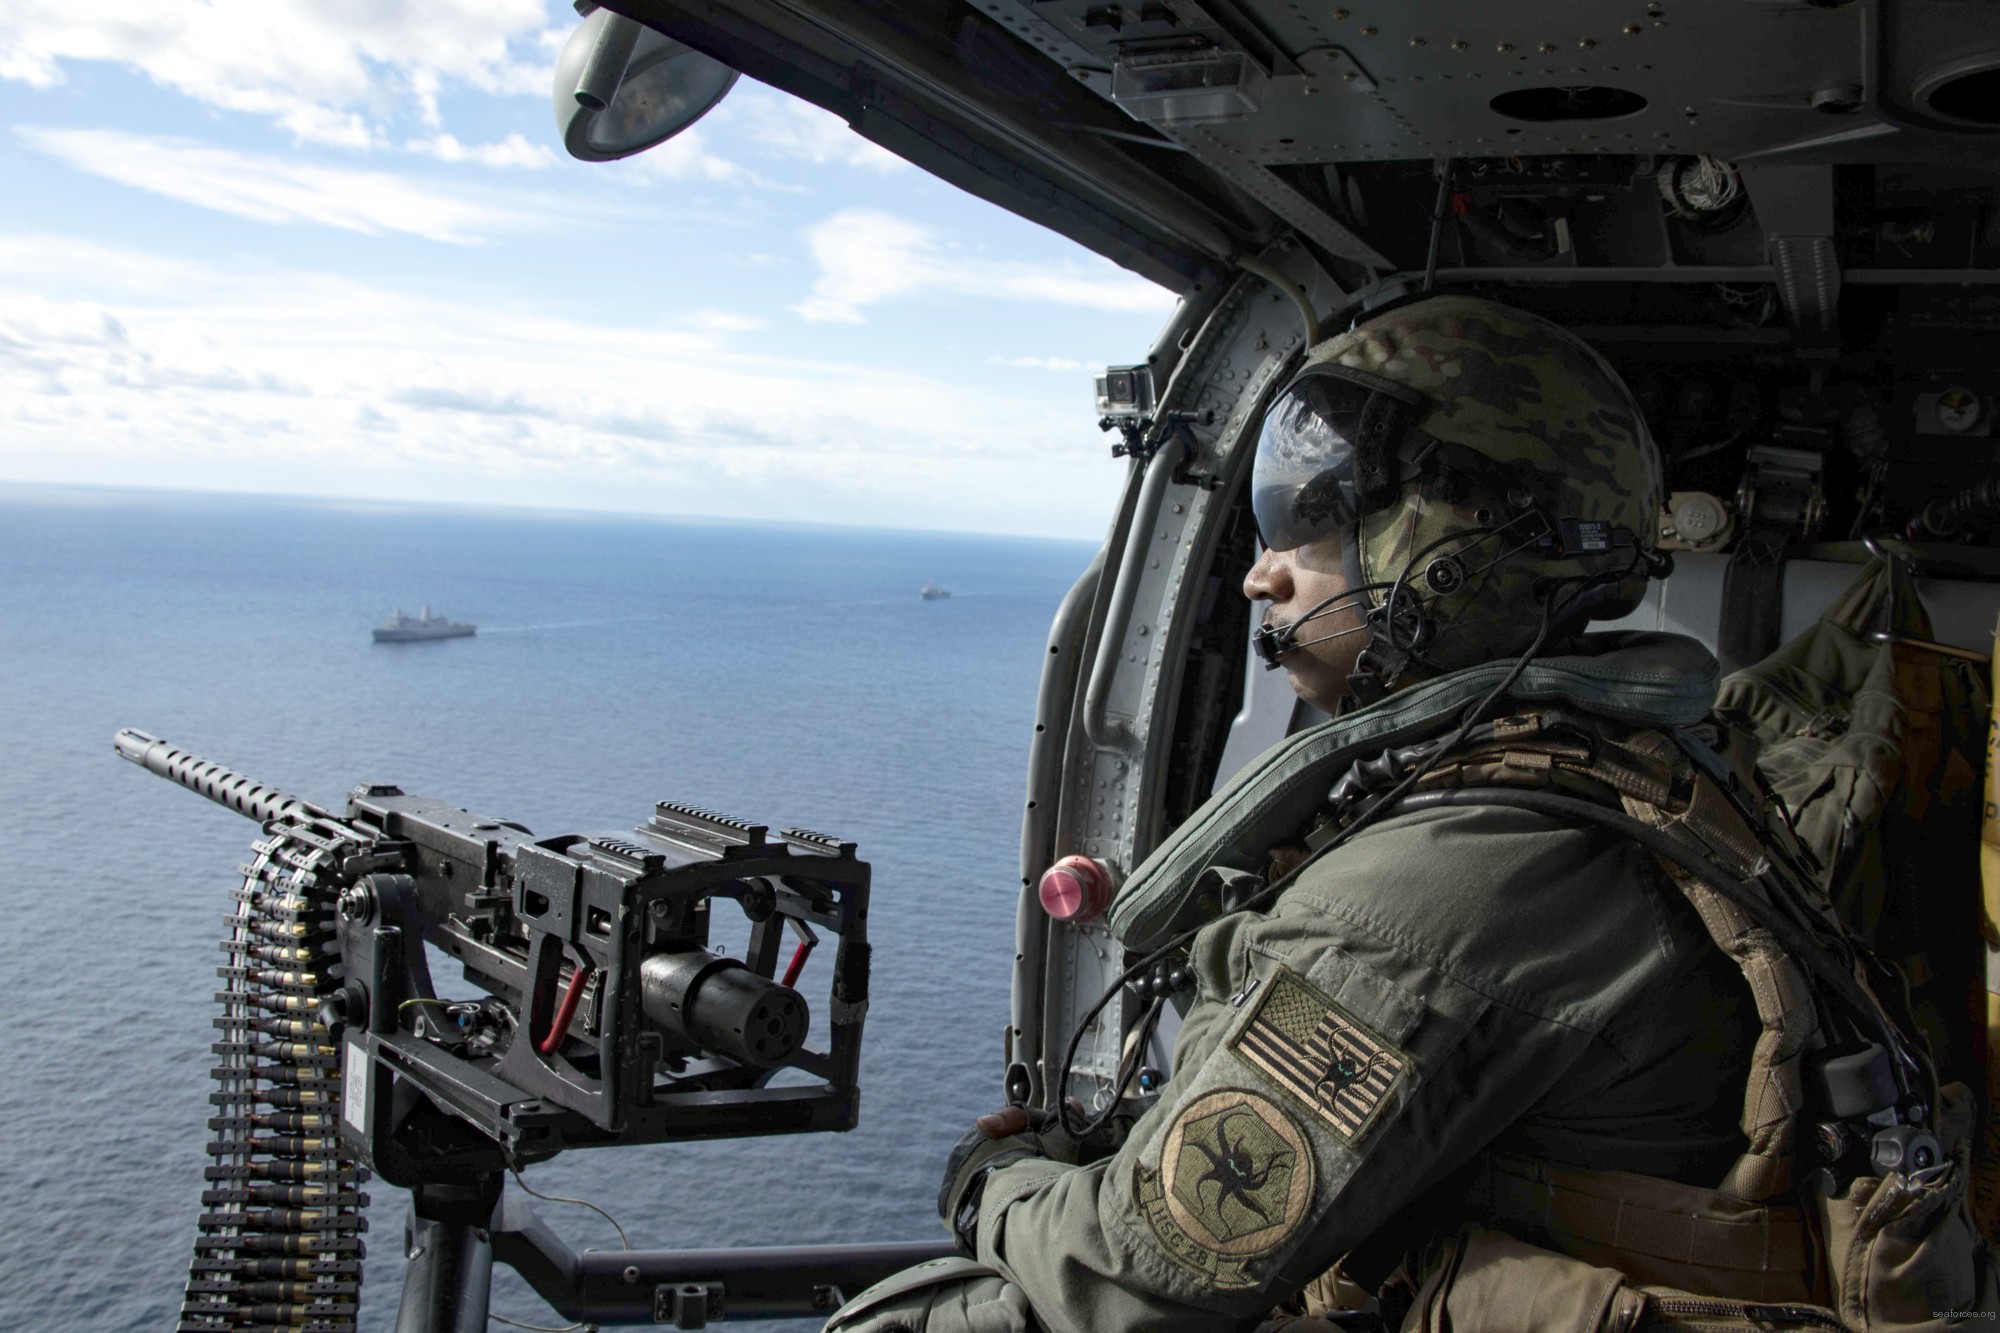 hsc-28 dragon whales helicopter sea combat squadron mh-60s seahawk us navy 03 caliber .50 machine gun door